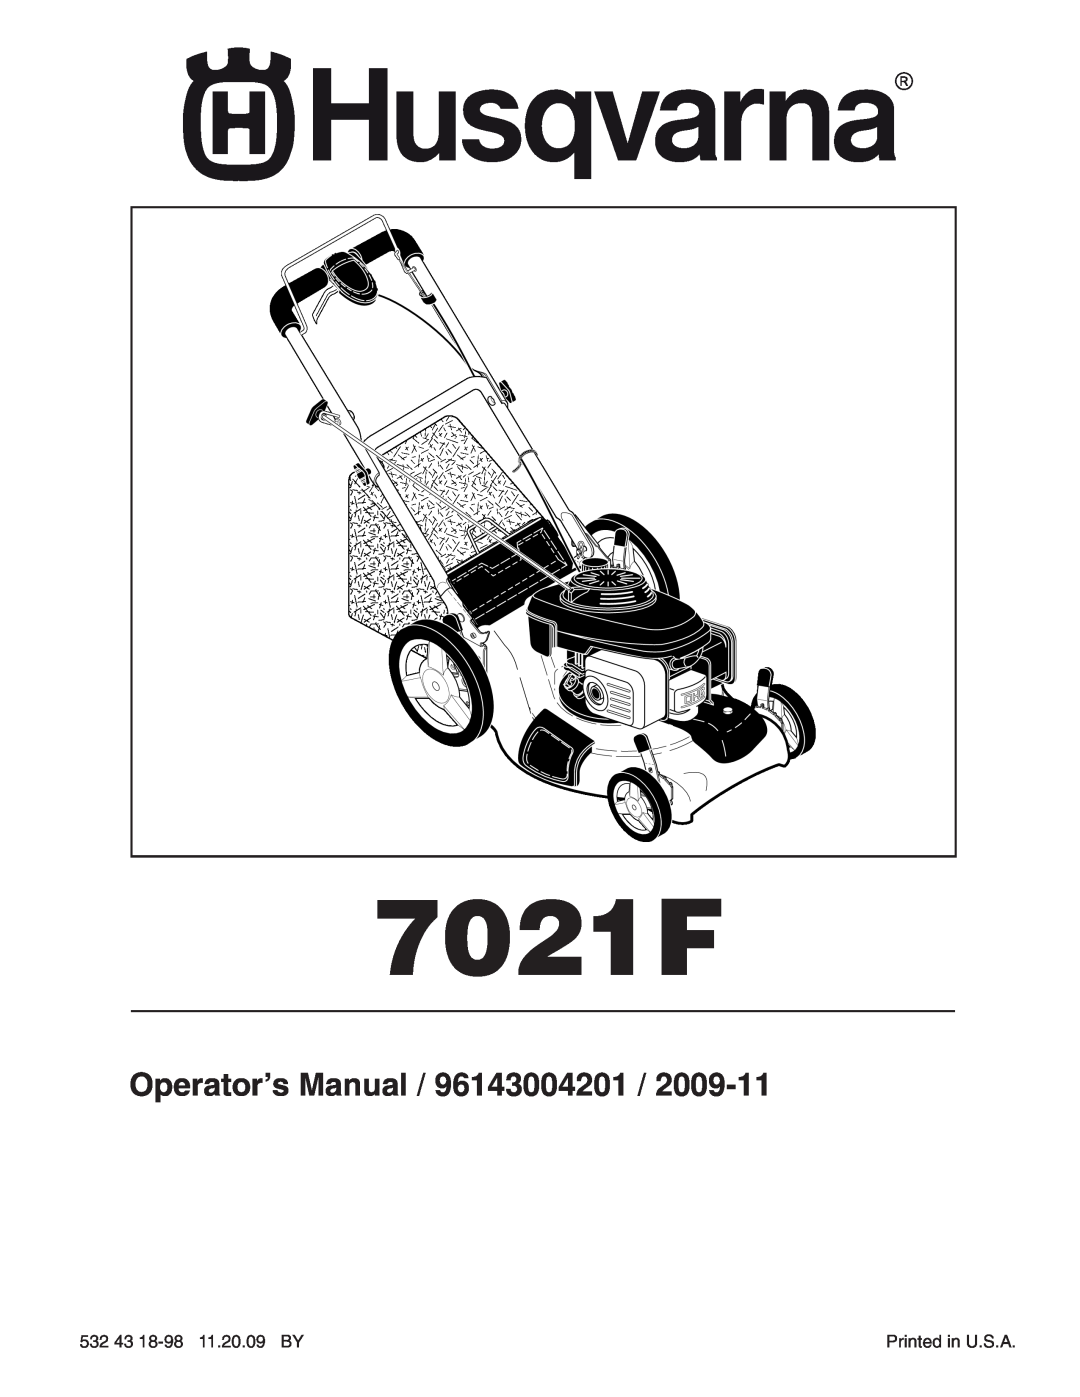 Husqvarna 7021F manual Operator’s Manual 